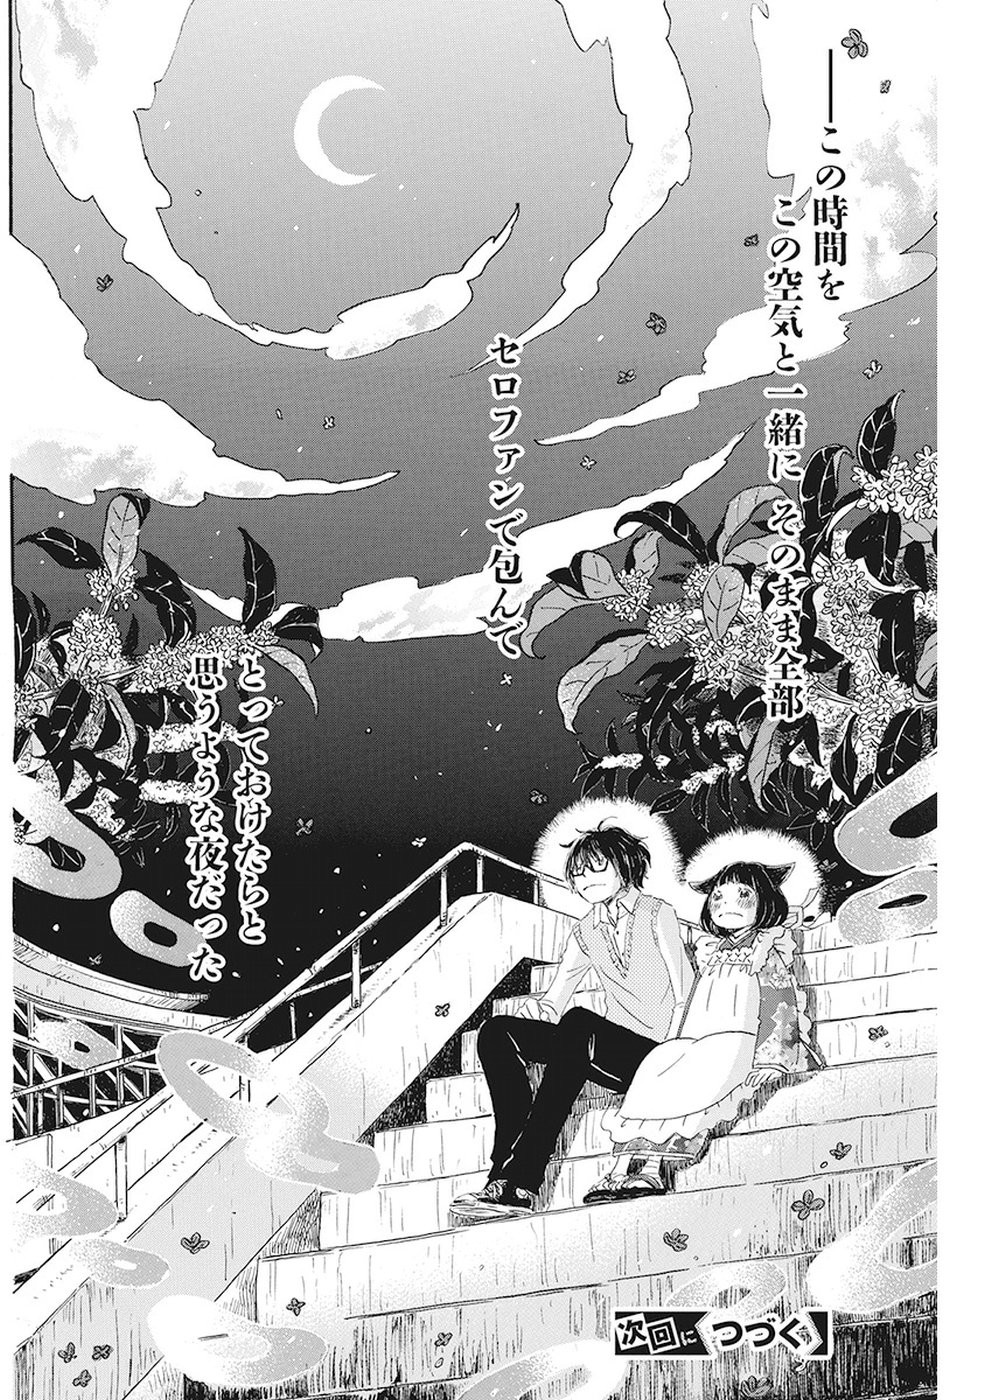 3 Gatsu no Lion - Chapter 155 - Page 12